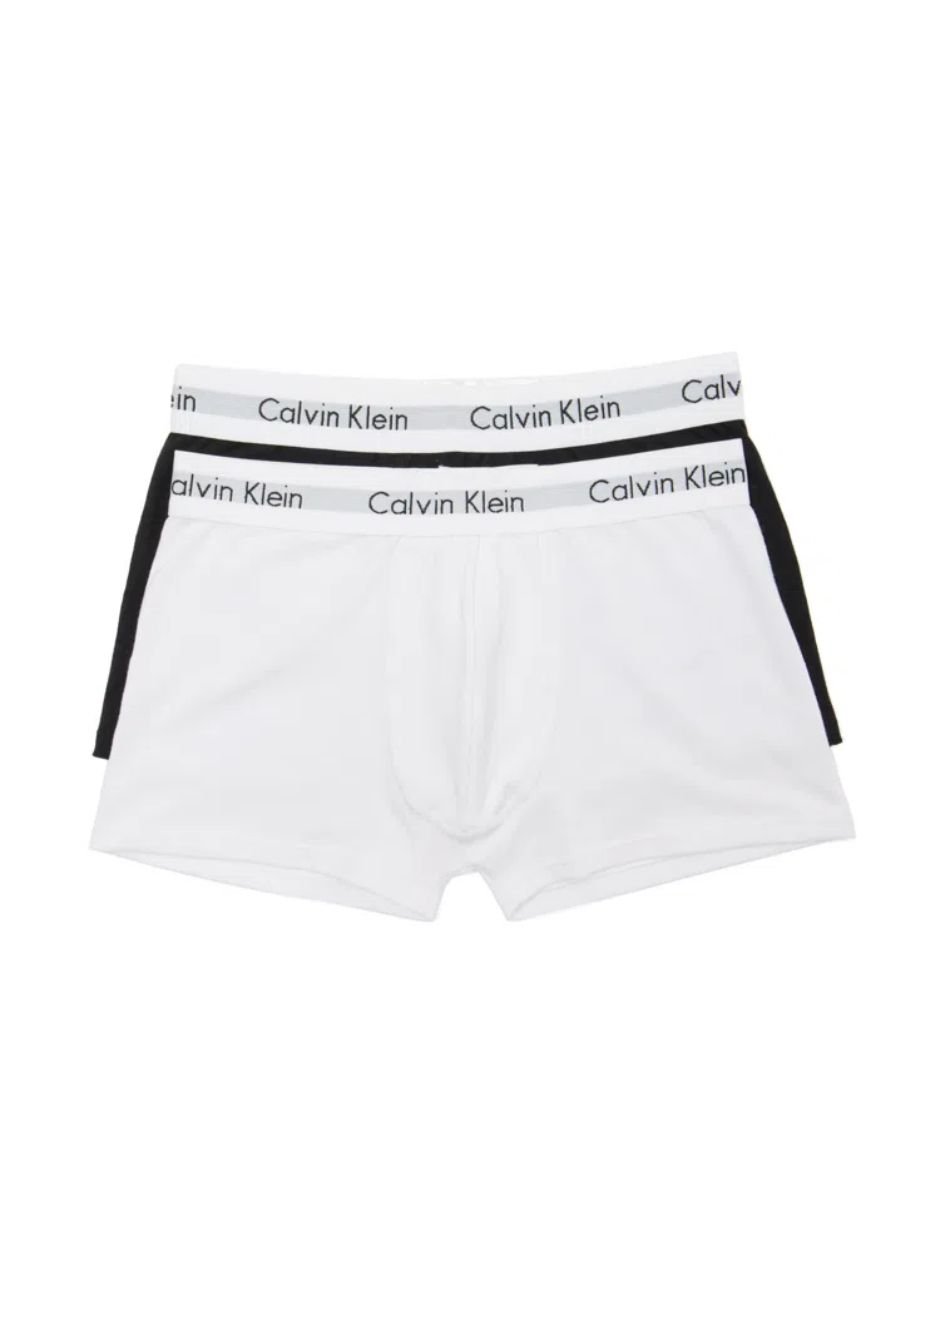 Kit 3 Cuecas Calvin Klein Low Rise Trunk Branca Branco